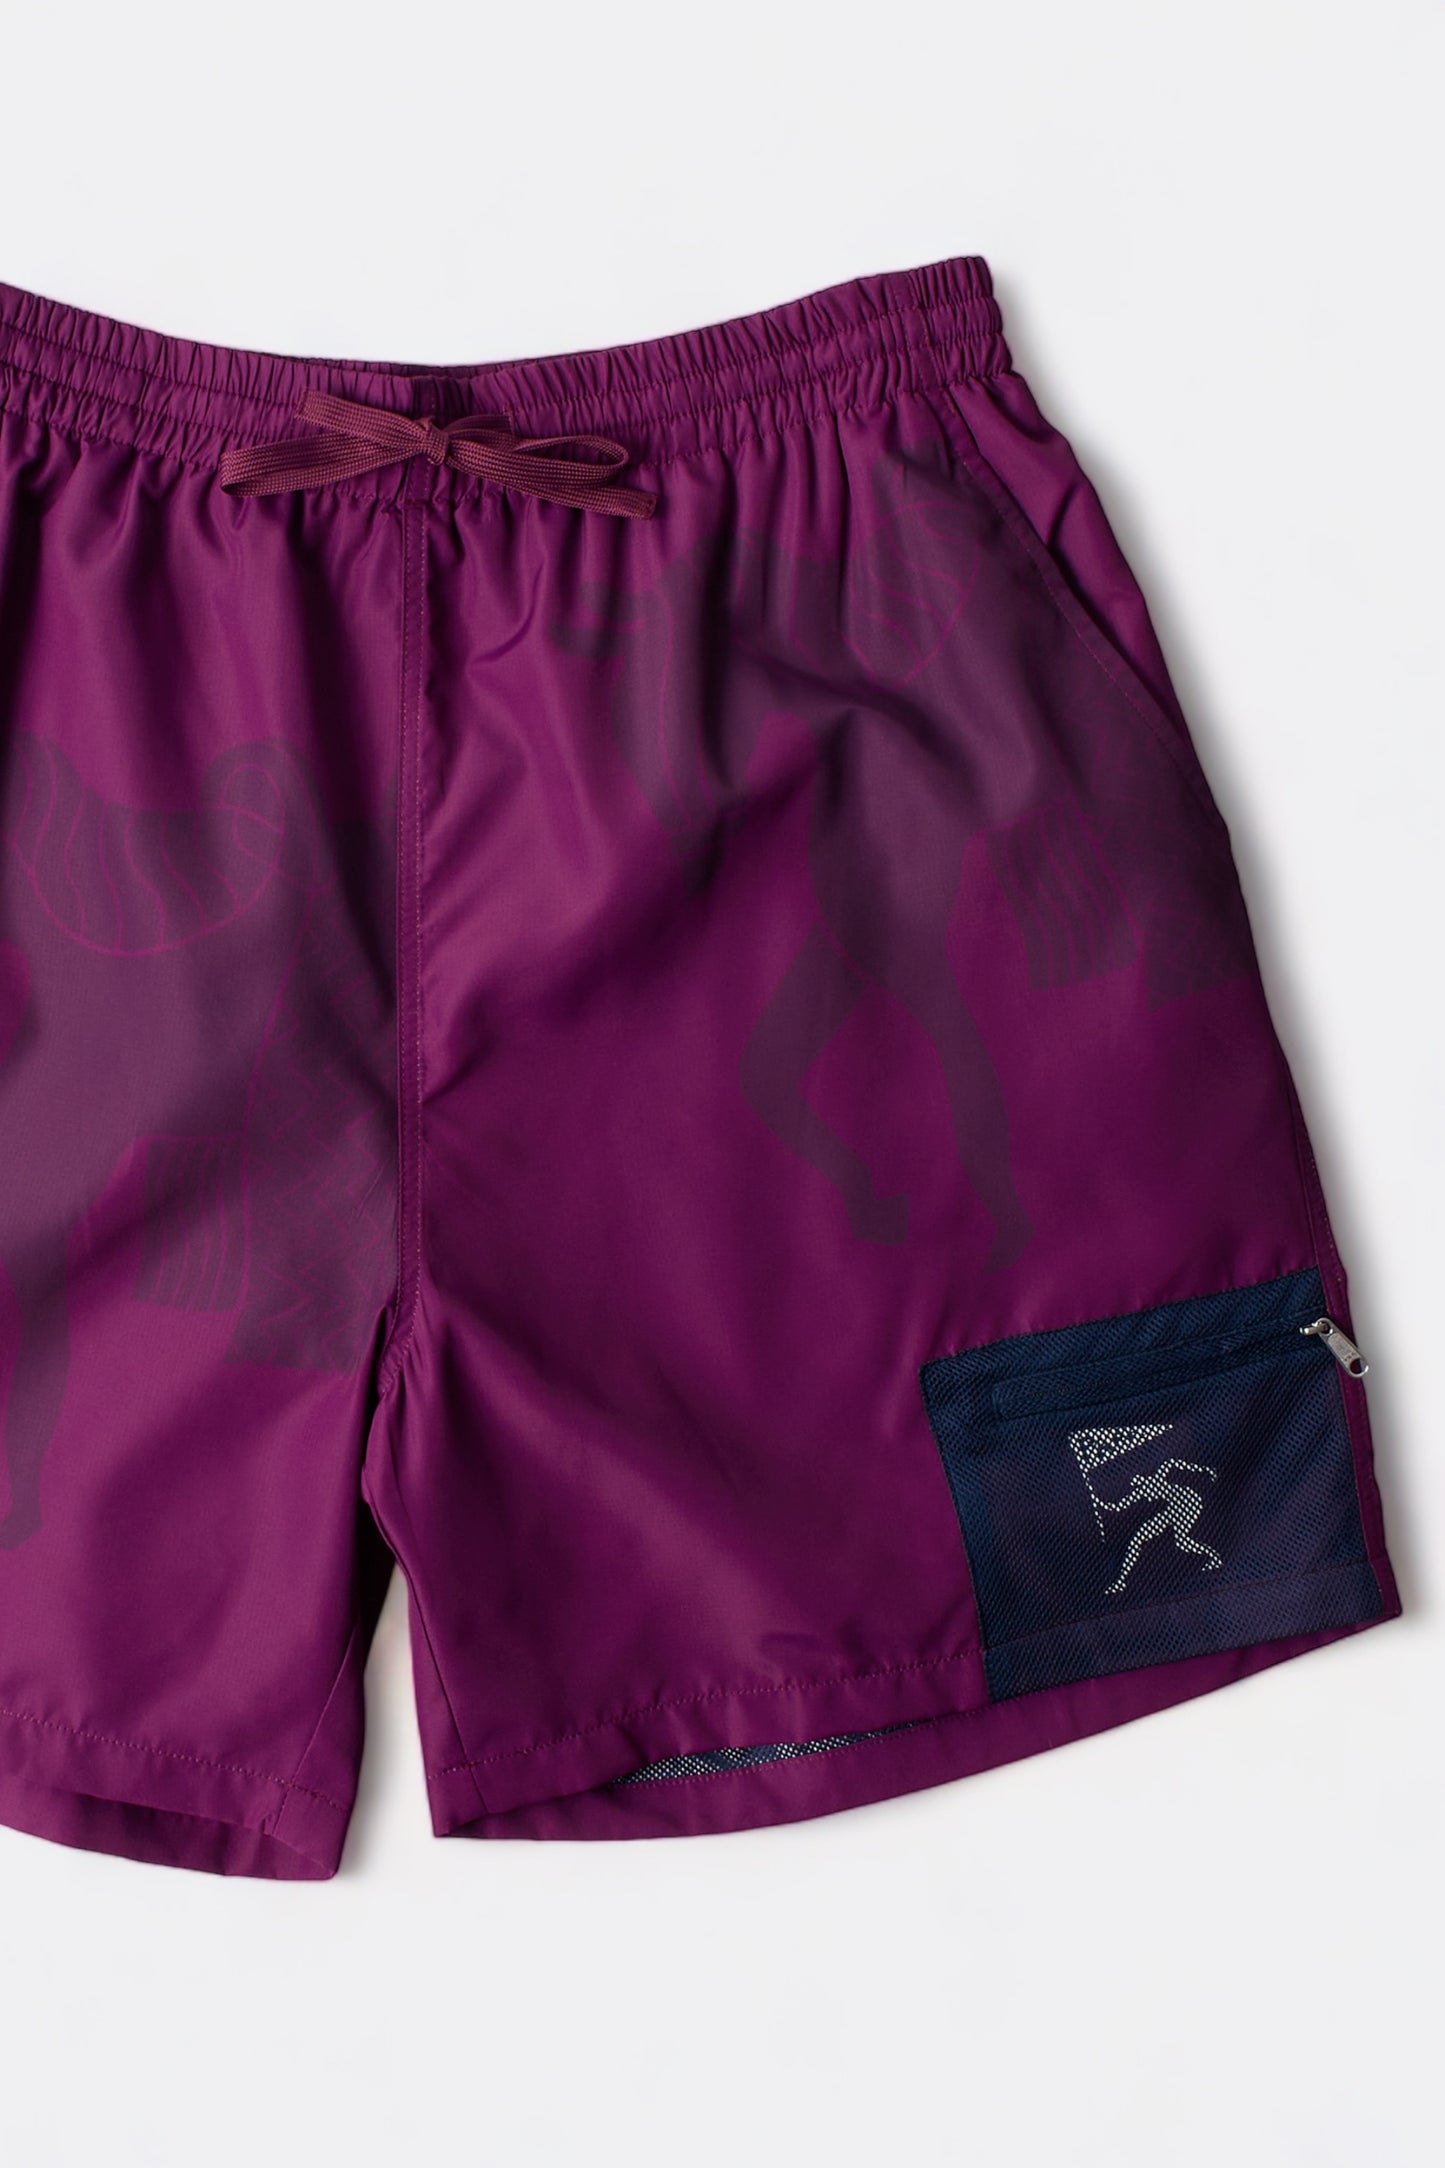 Parra - Short Horse Shorts (Tyrian Purple)